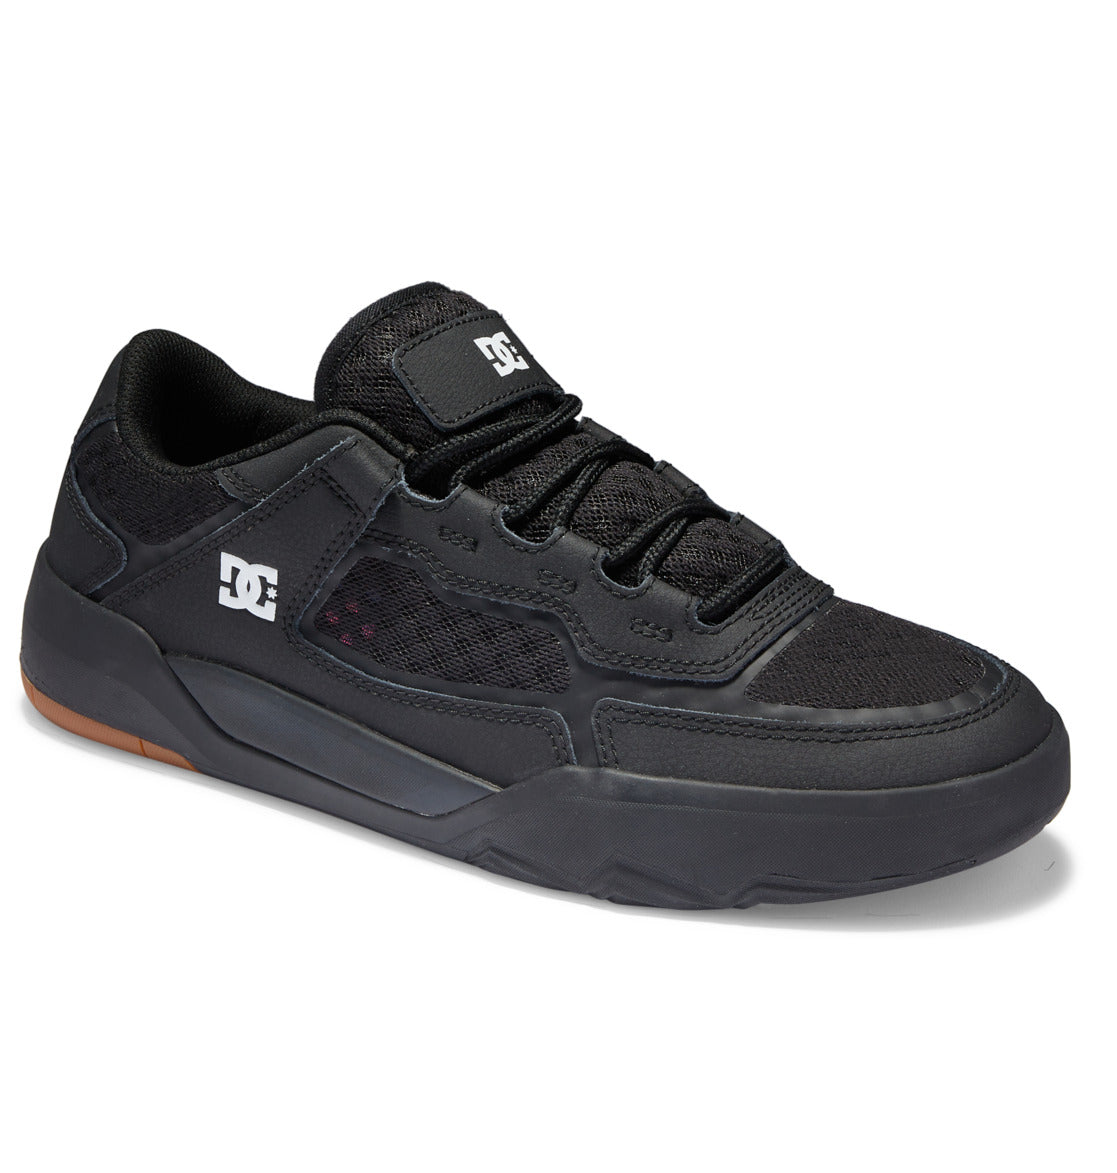 Zapatilla de skate Dc Shoes Metric - Black/Black/Gum